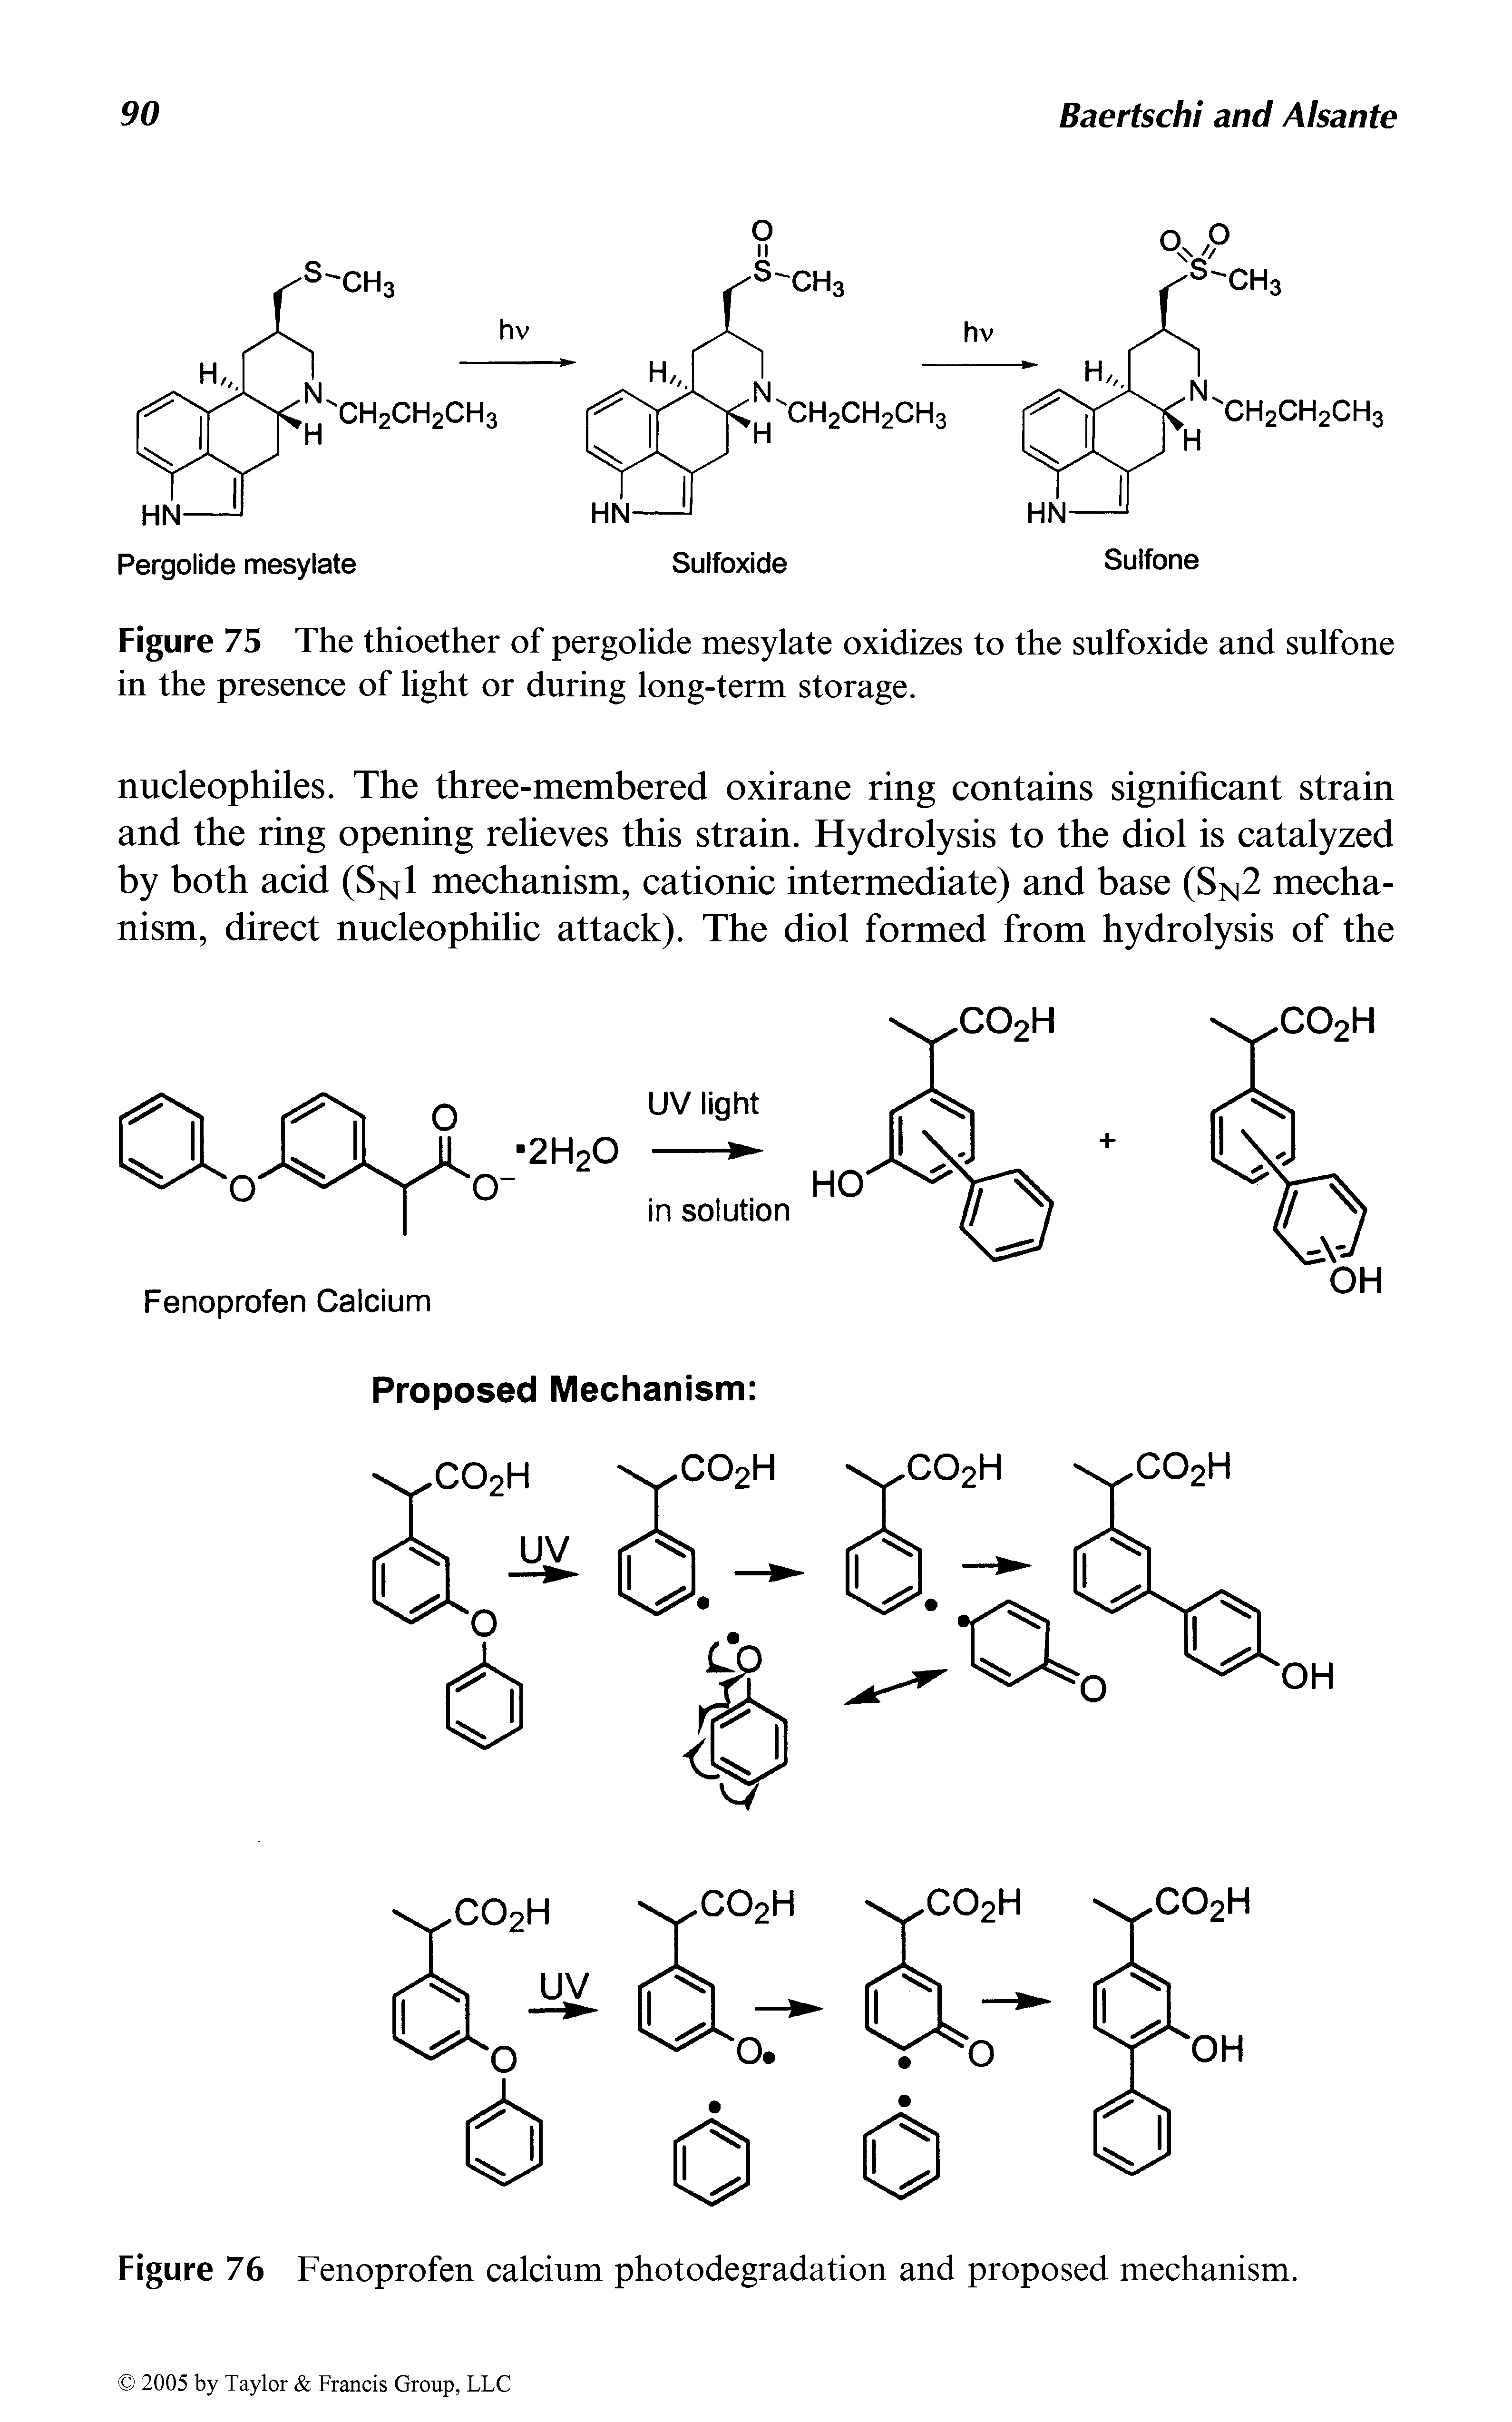 Figure 76 Fenoprofen calcium photodegradation and proposed mechanism.